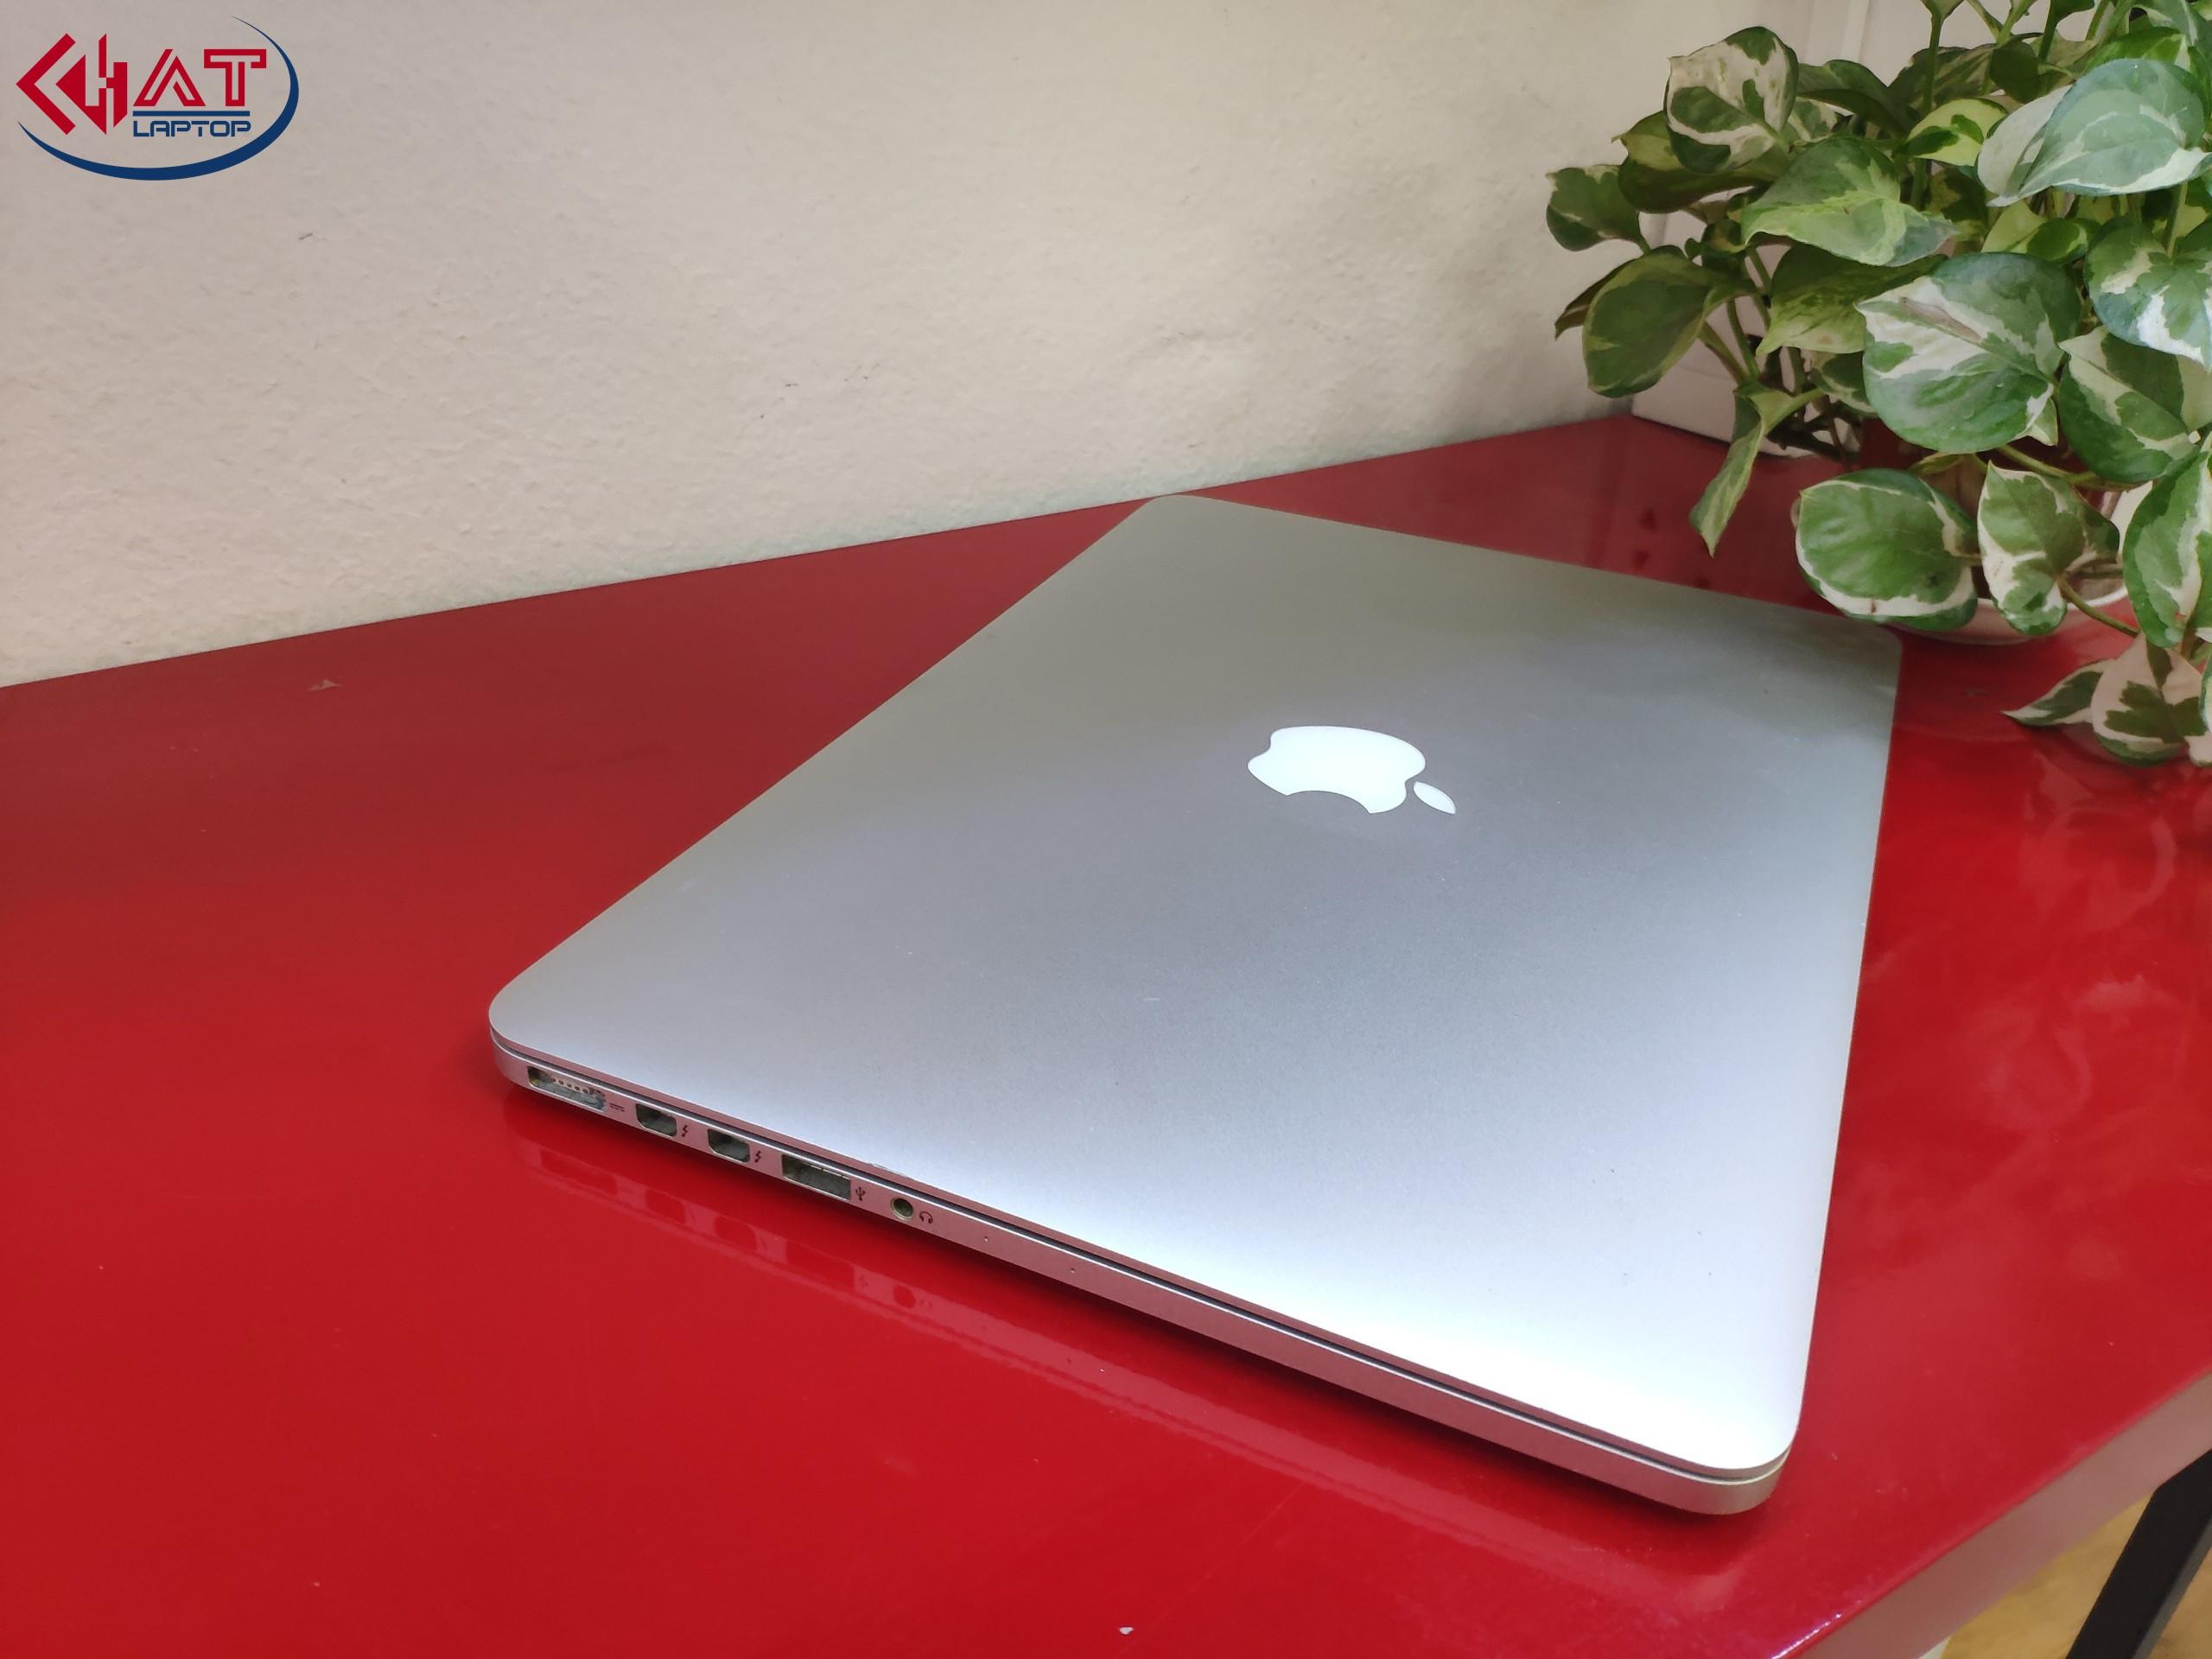 Macbook Pro Retina 13 inch 2015 MF840 Core i5 8GB 256GB – Like new